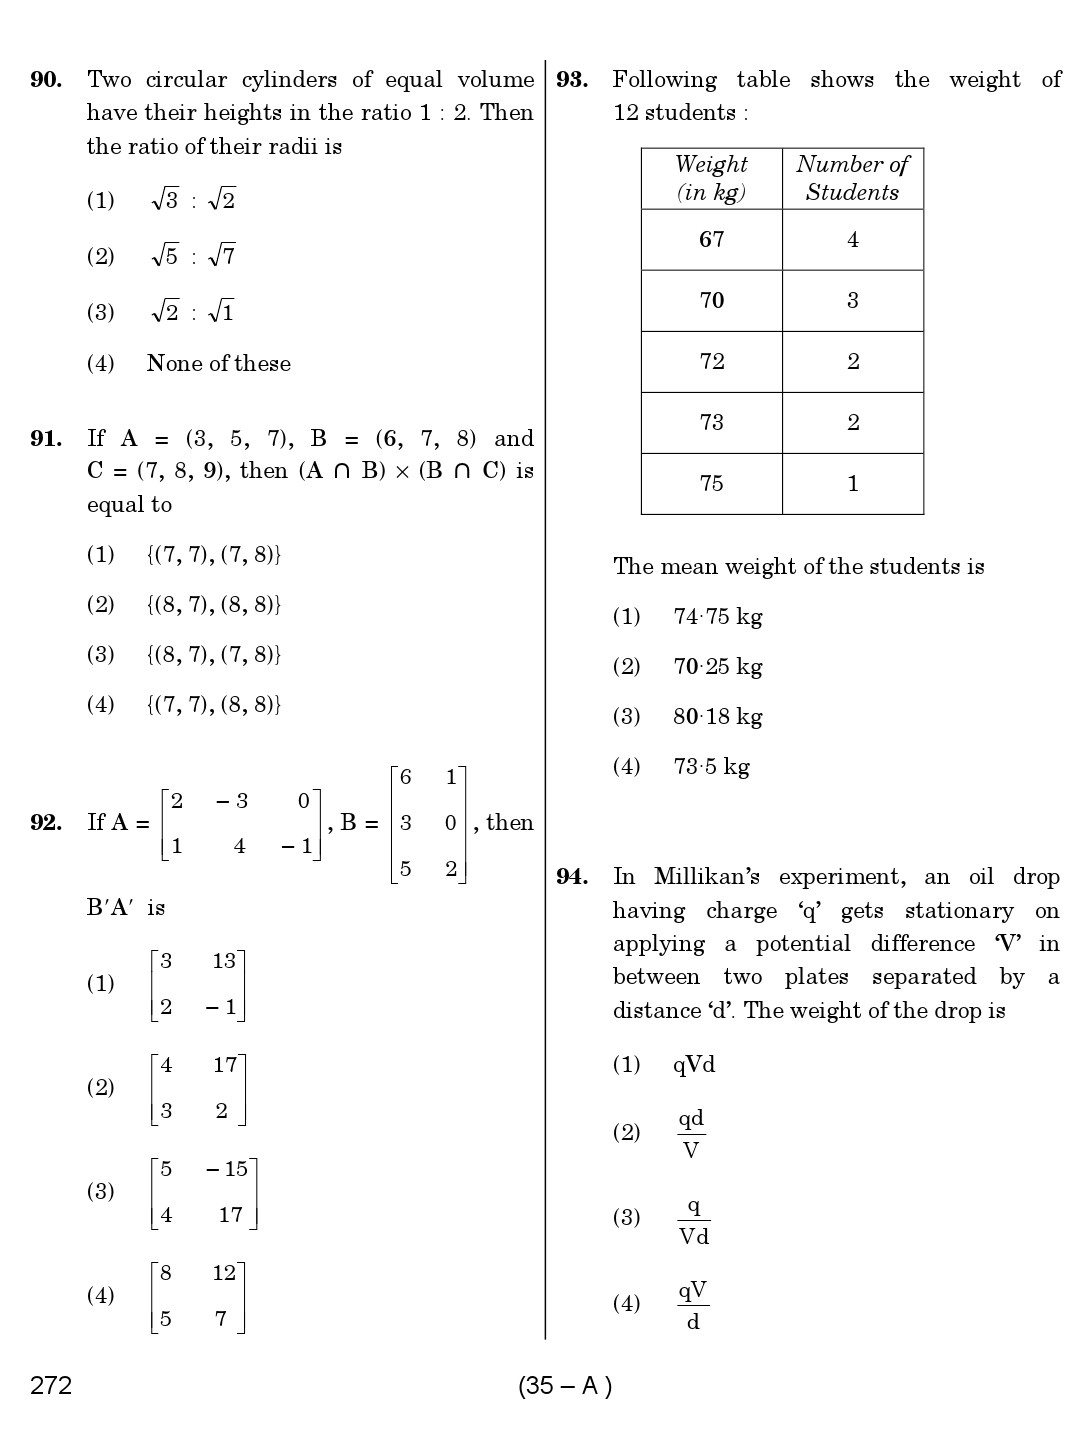 Karnataka PSC Mathematics Teacher Exam Sample Question Paper Subject code 272 35